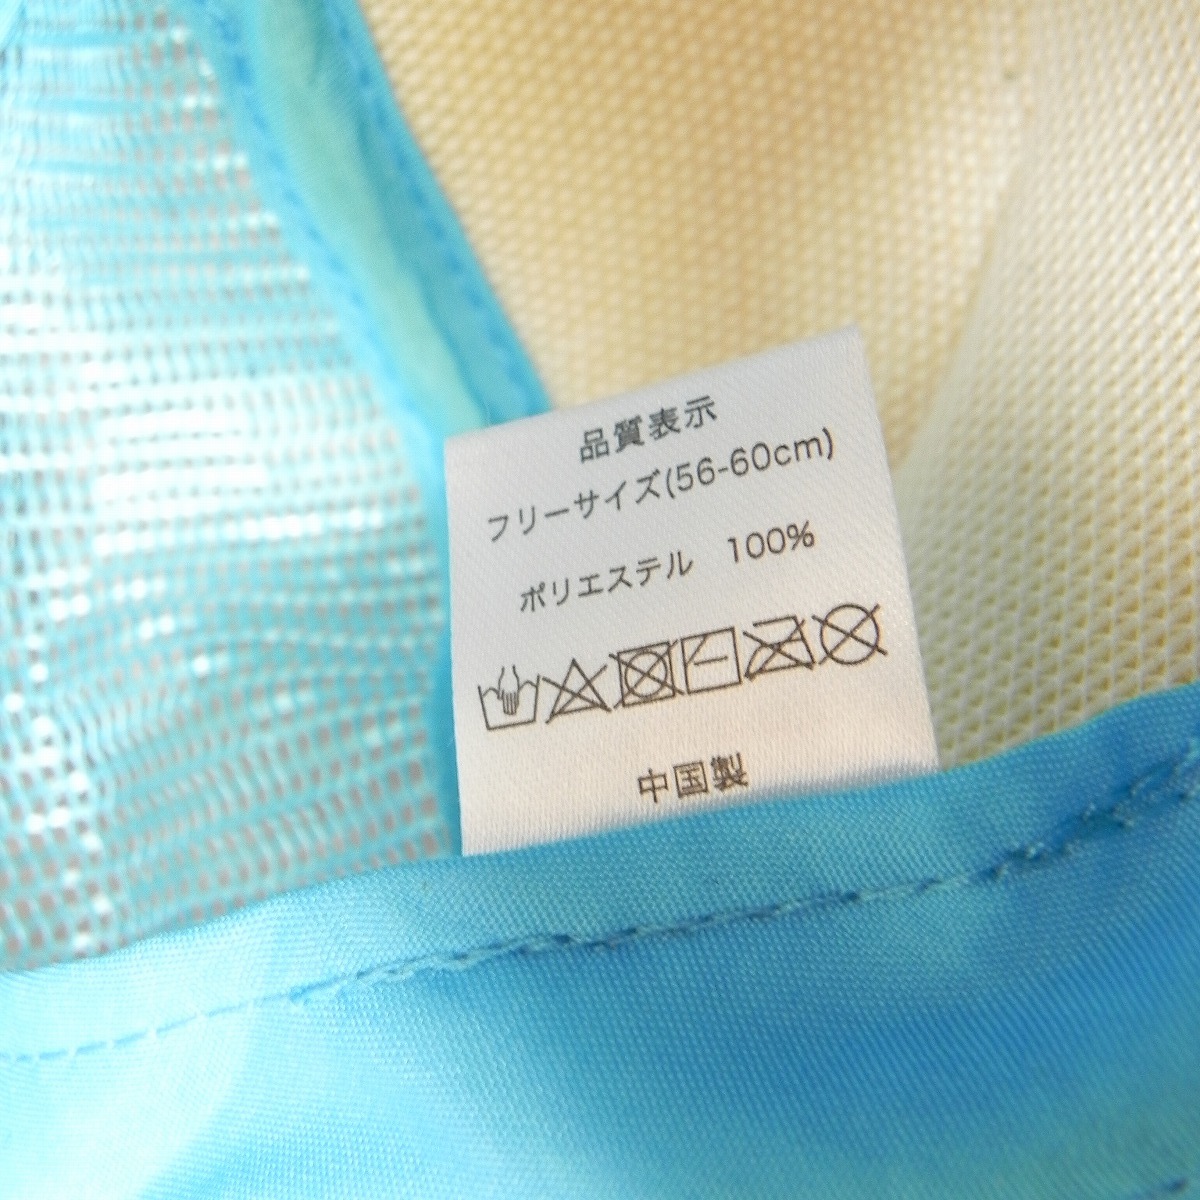  used old clothes Honda HONDA Suzuka SUZUKA mesh cap light blue free size hat baseball cap *h